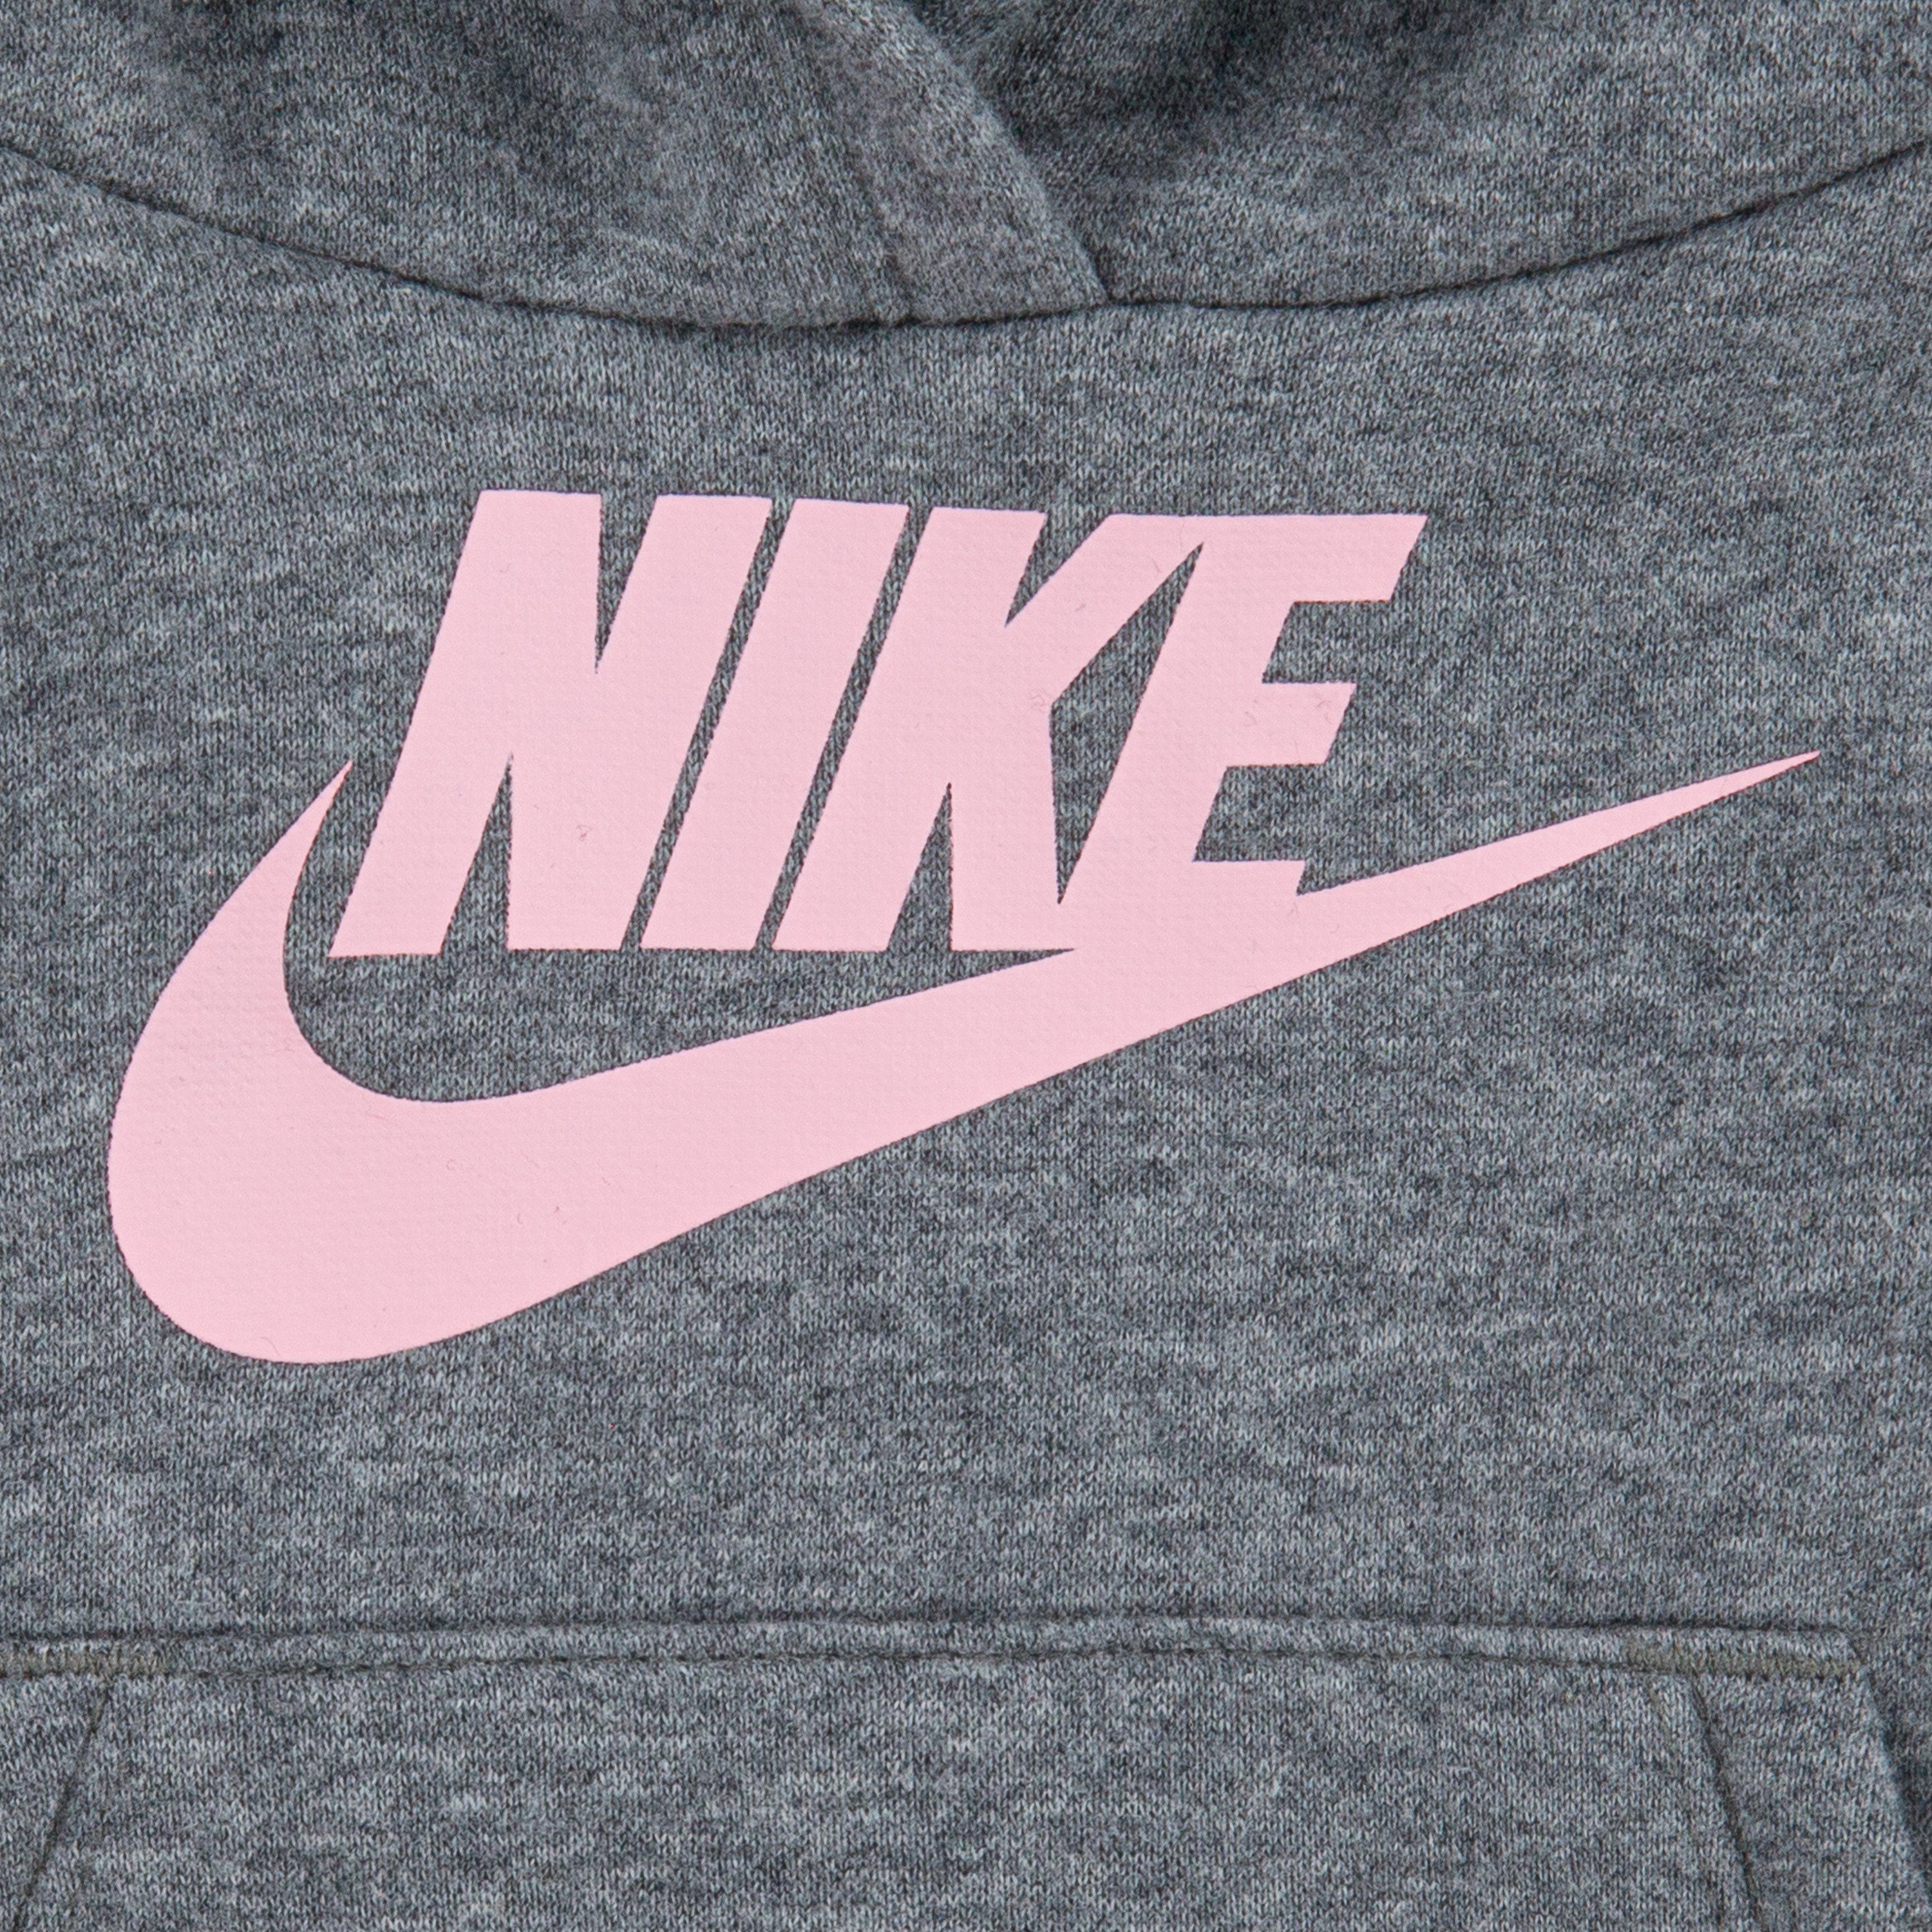 CLUB Sportswear SET grau-meliert FLEECE Nike Jogginganzug